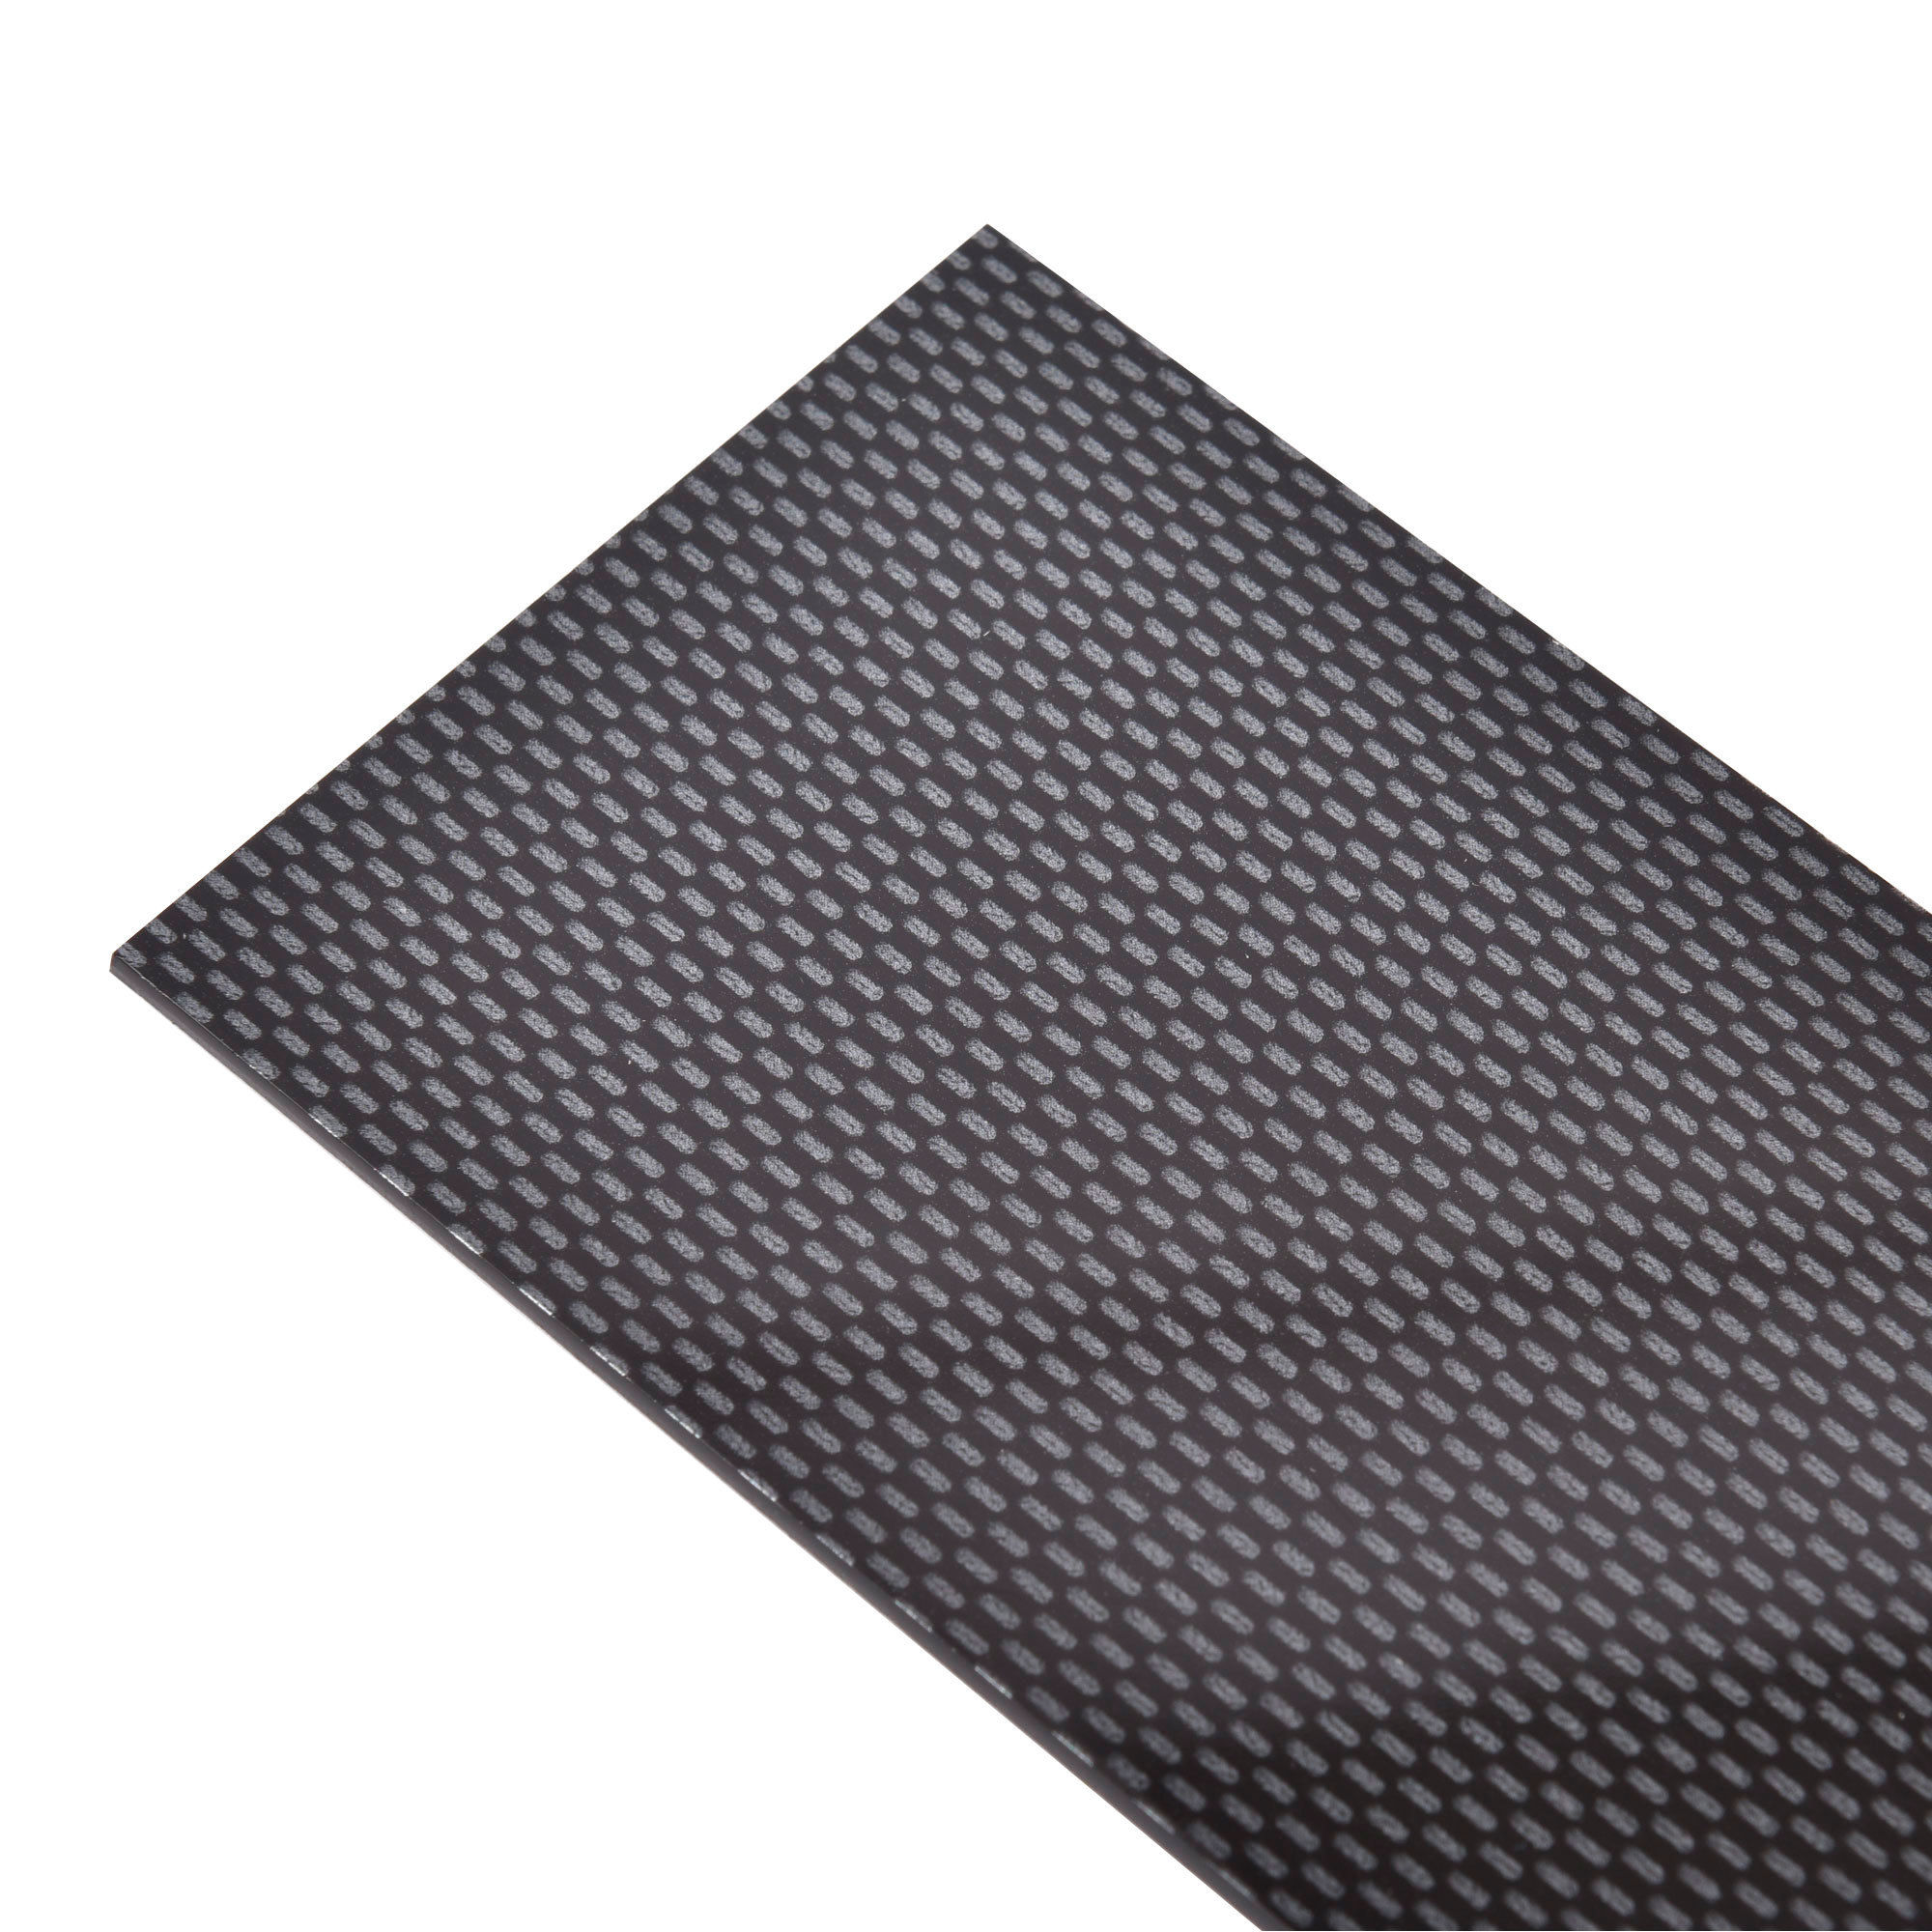 2" X 3" X 7" Black Color ABS Plastic Sheet Panel 